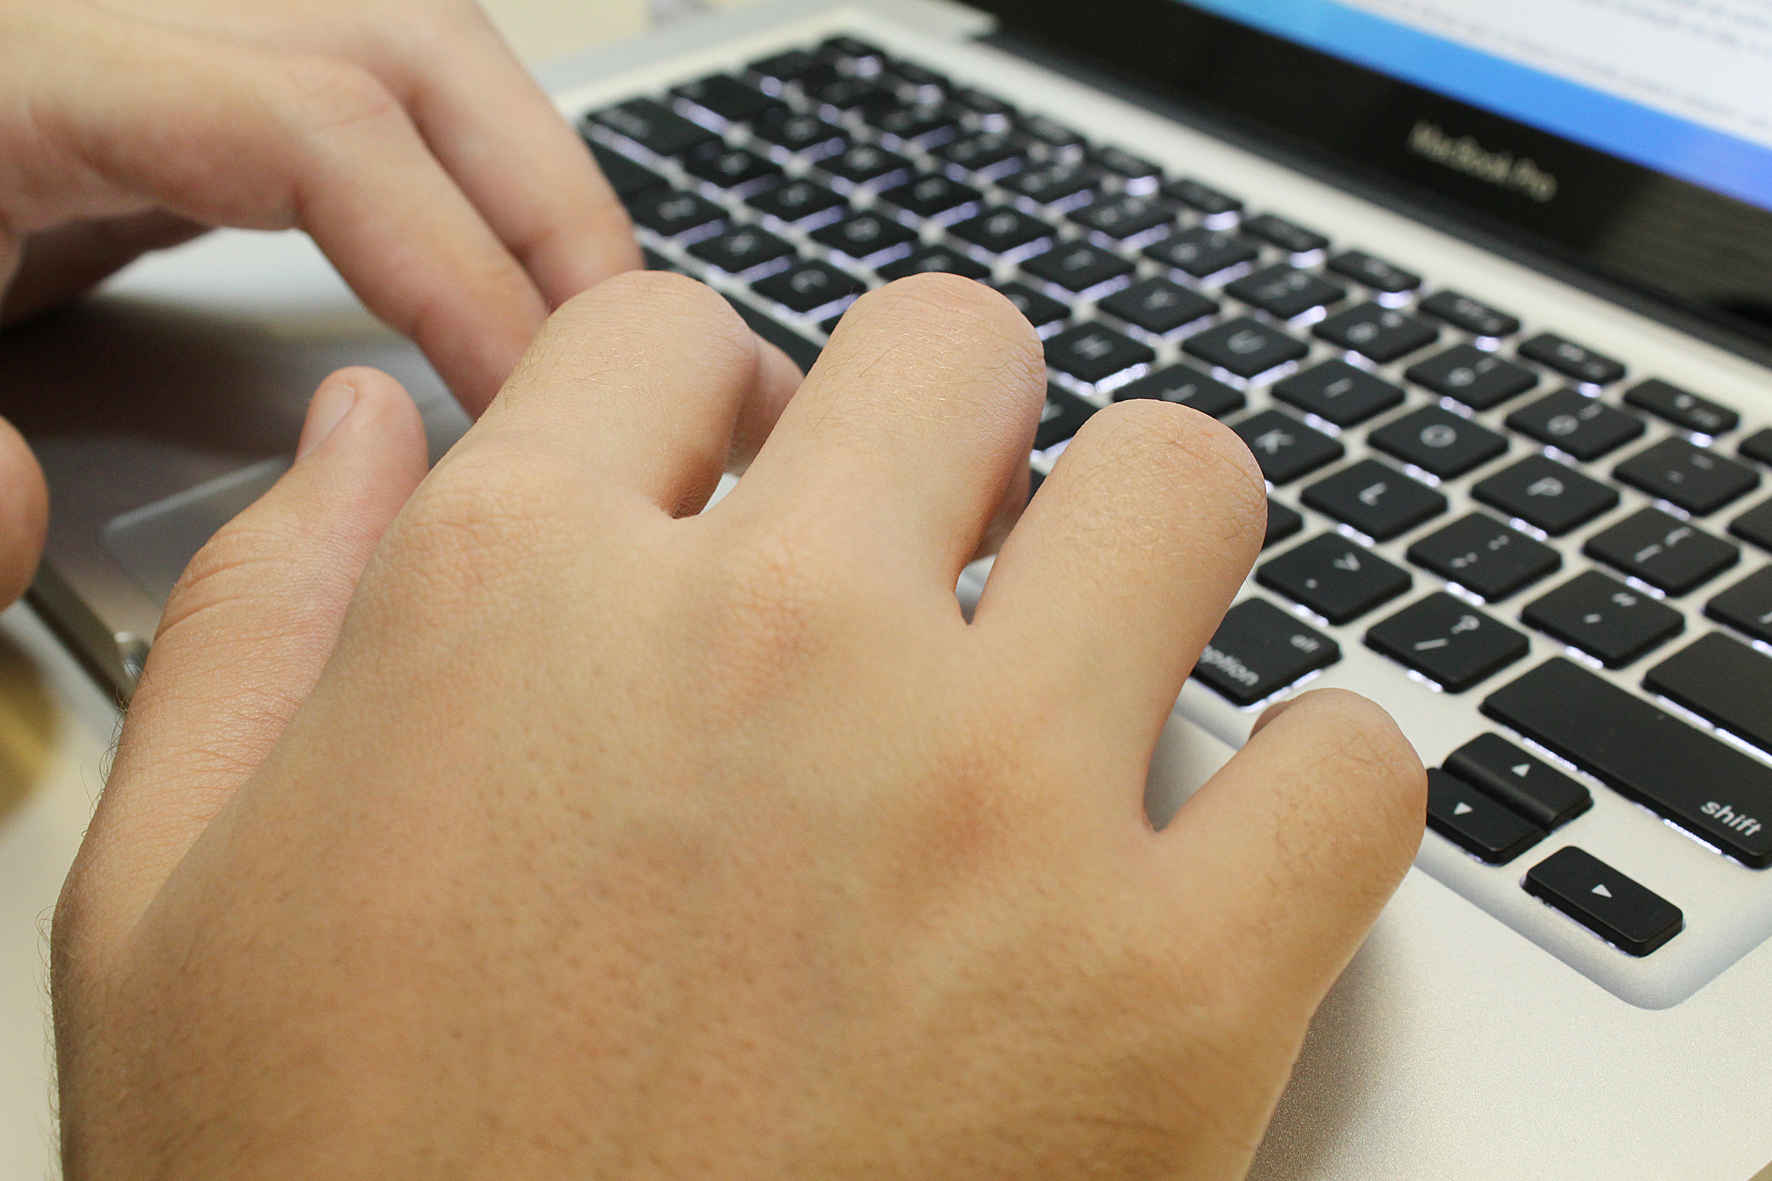 Hand types on laptop keyboard